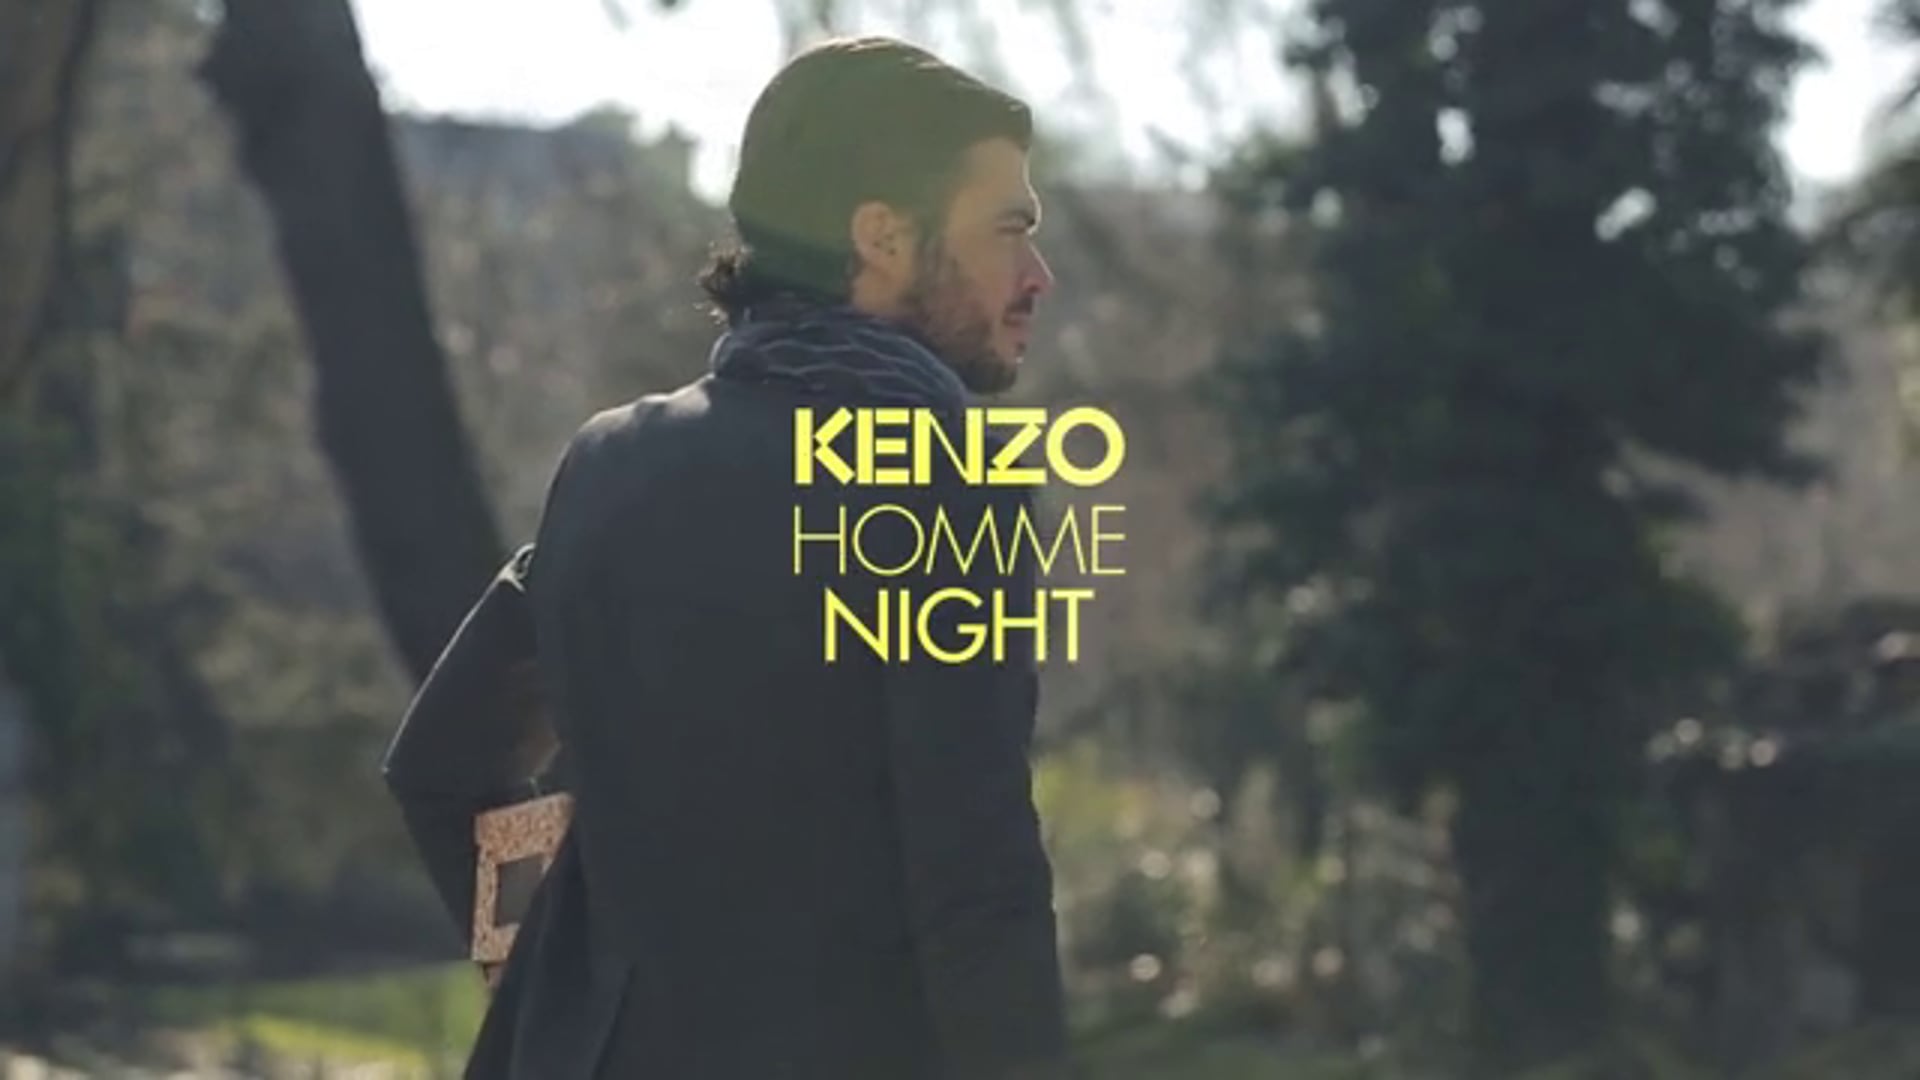 Kenzo Homme Night